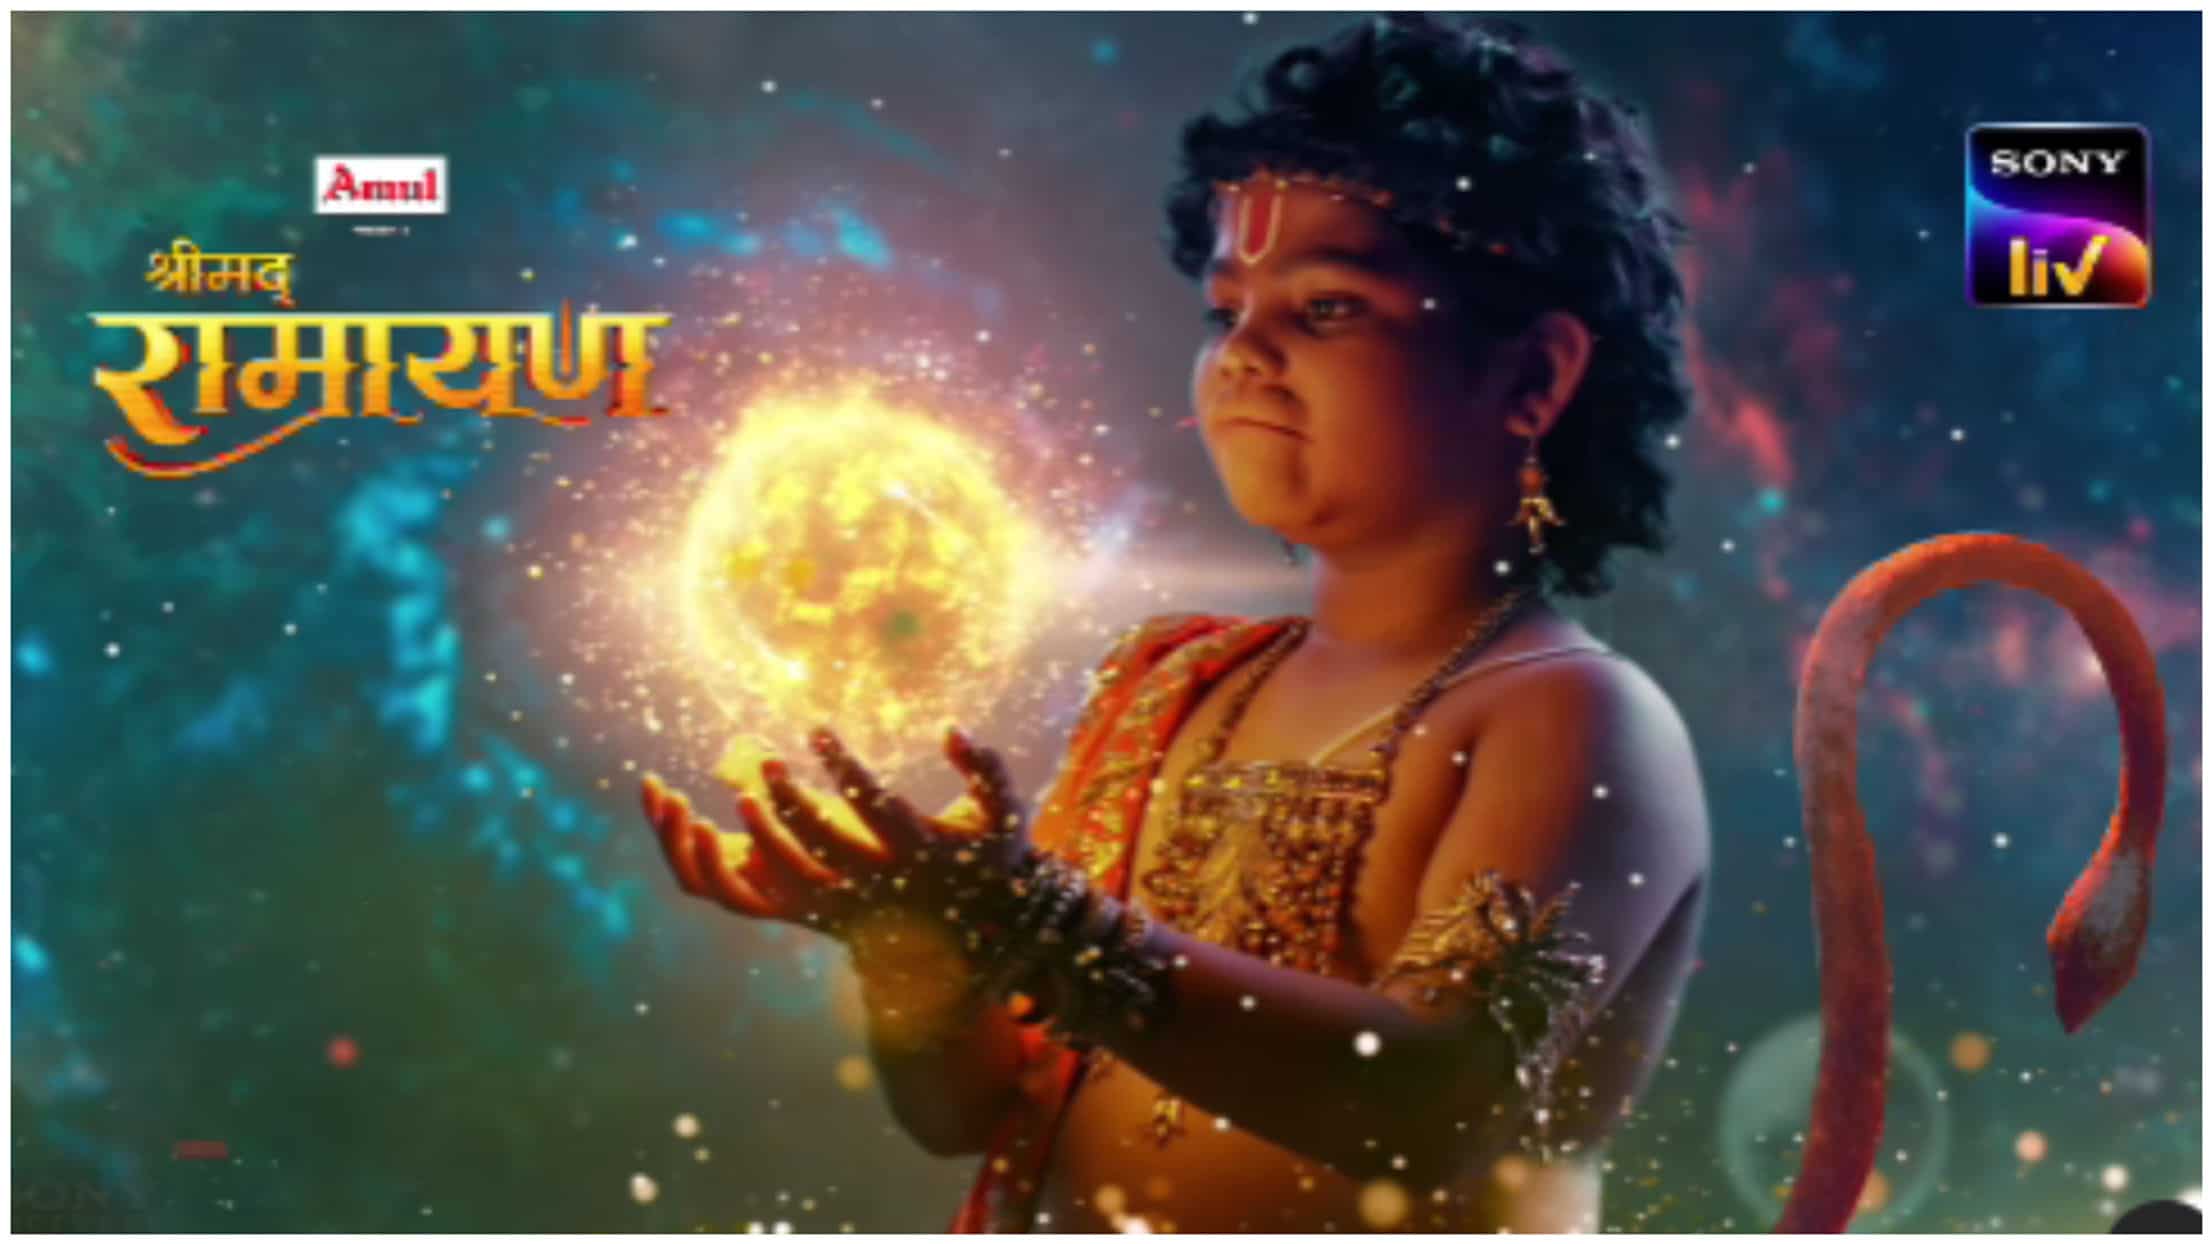 https://www.mobilemasala.com/movies/Shrimad-Ramayan-Know-what-Sony-LIV-viewers-can-watch-on-Hanuman-Jayanti-i256546